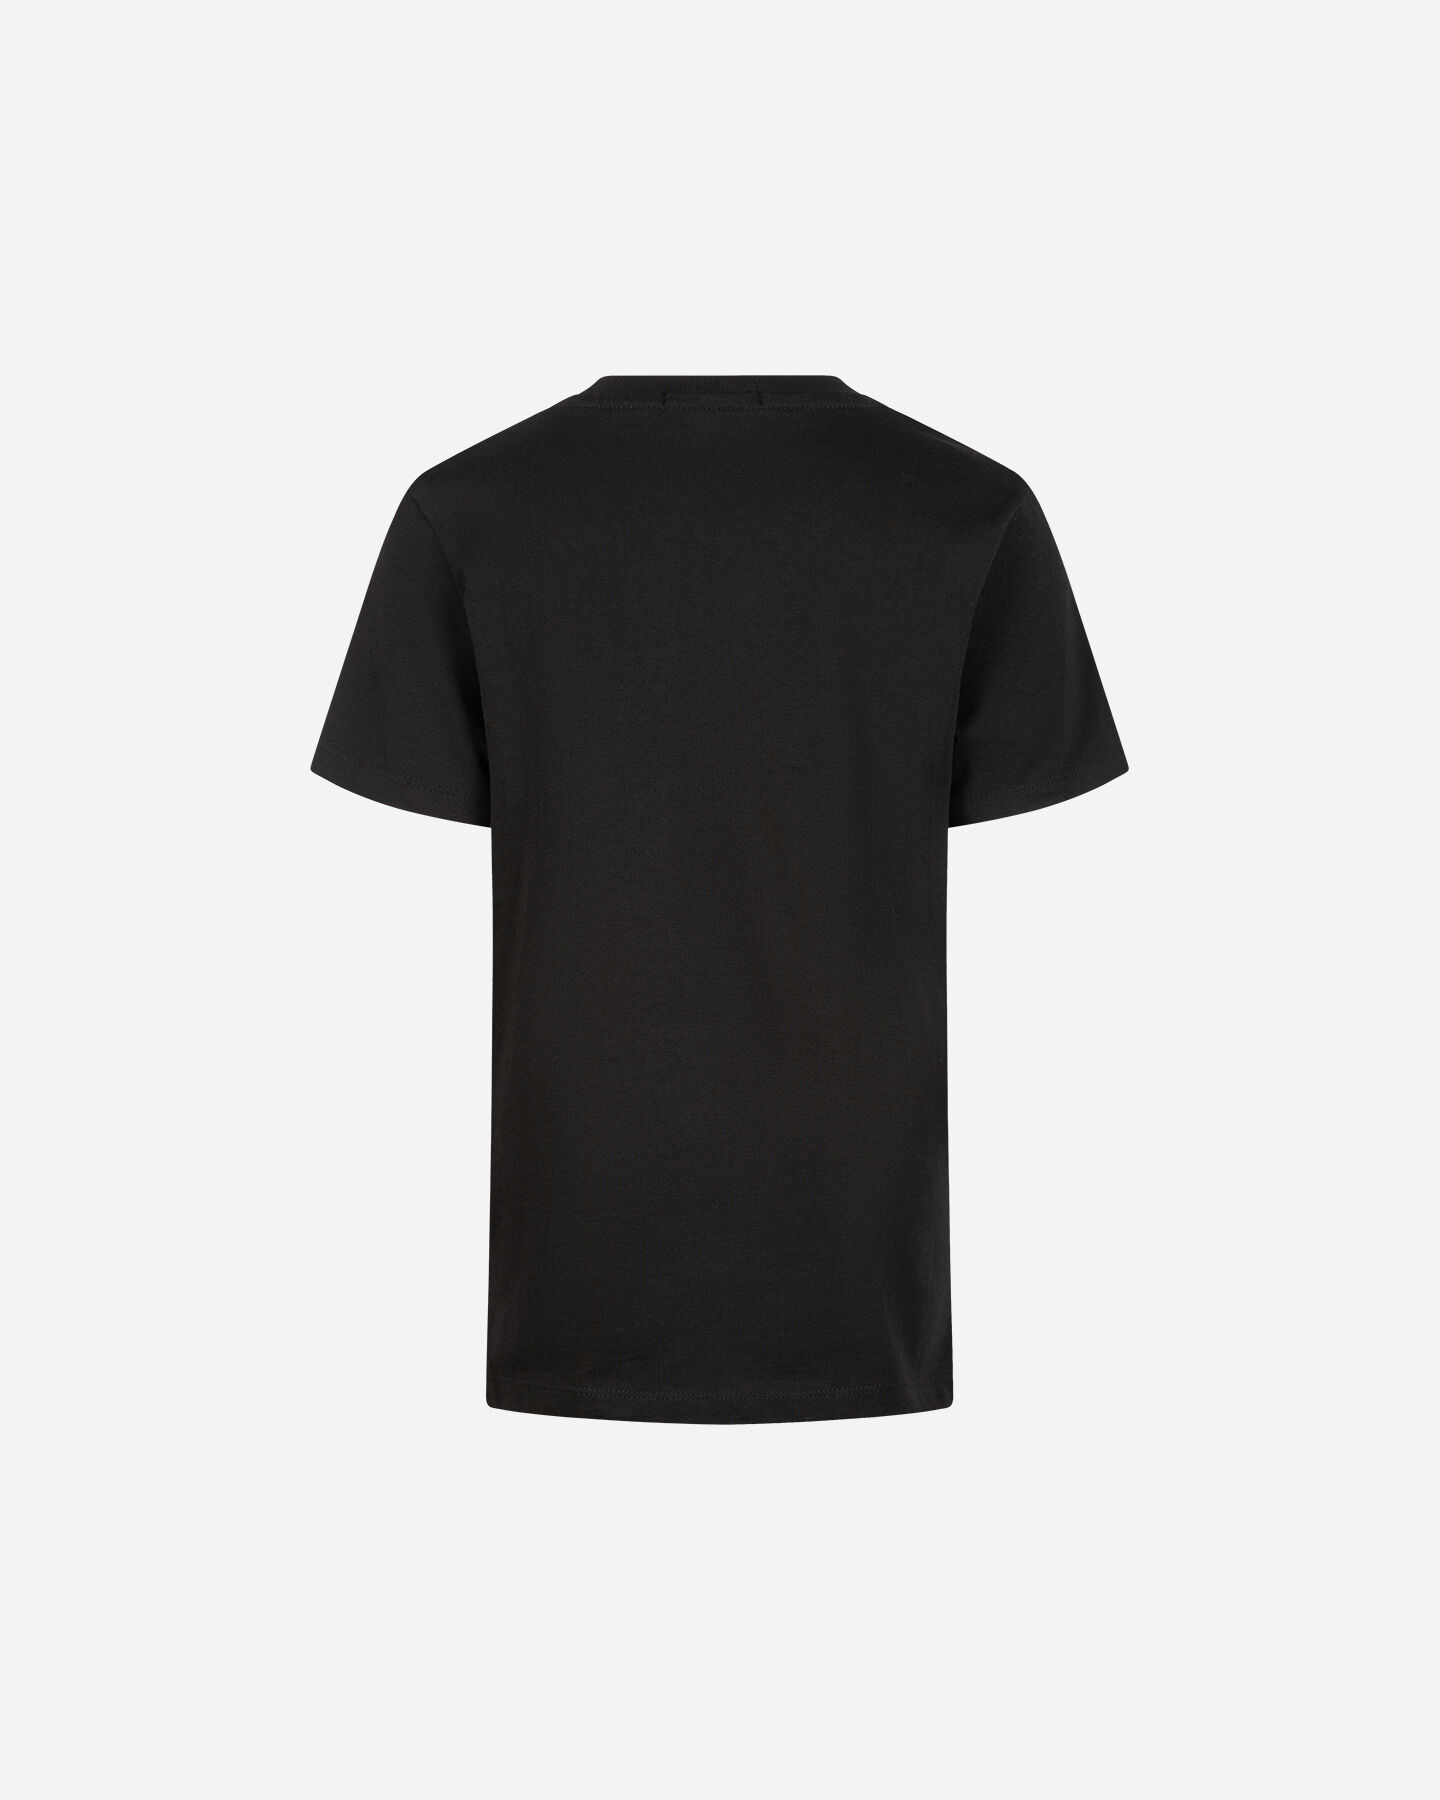  T-Shirt CALVIN KLEIN JEANS MONOGRAM JR S4131533|Ck Black|10 scatto 1